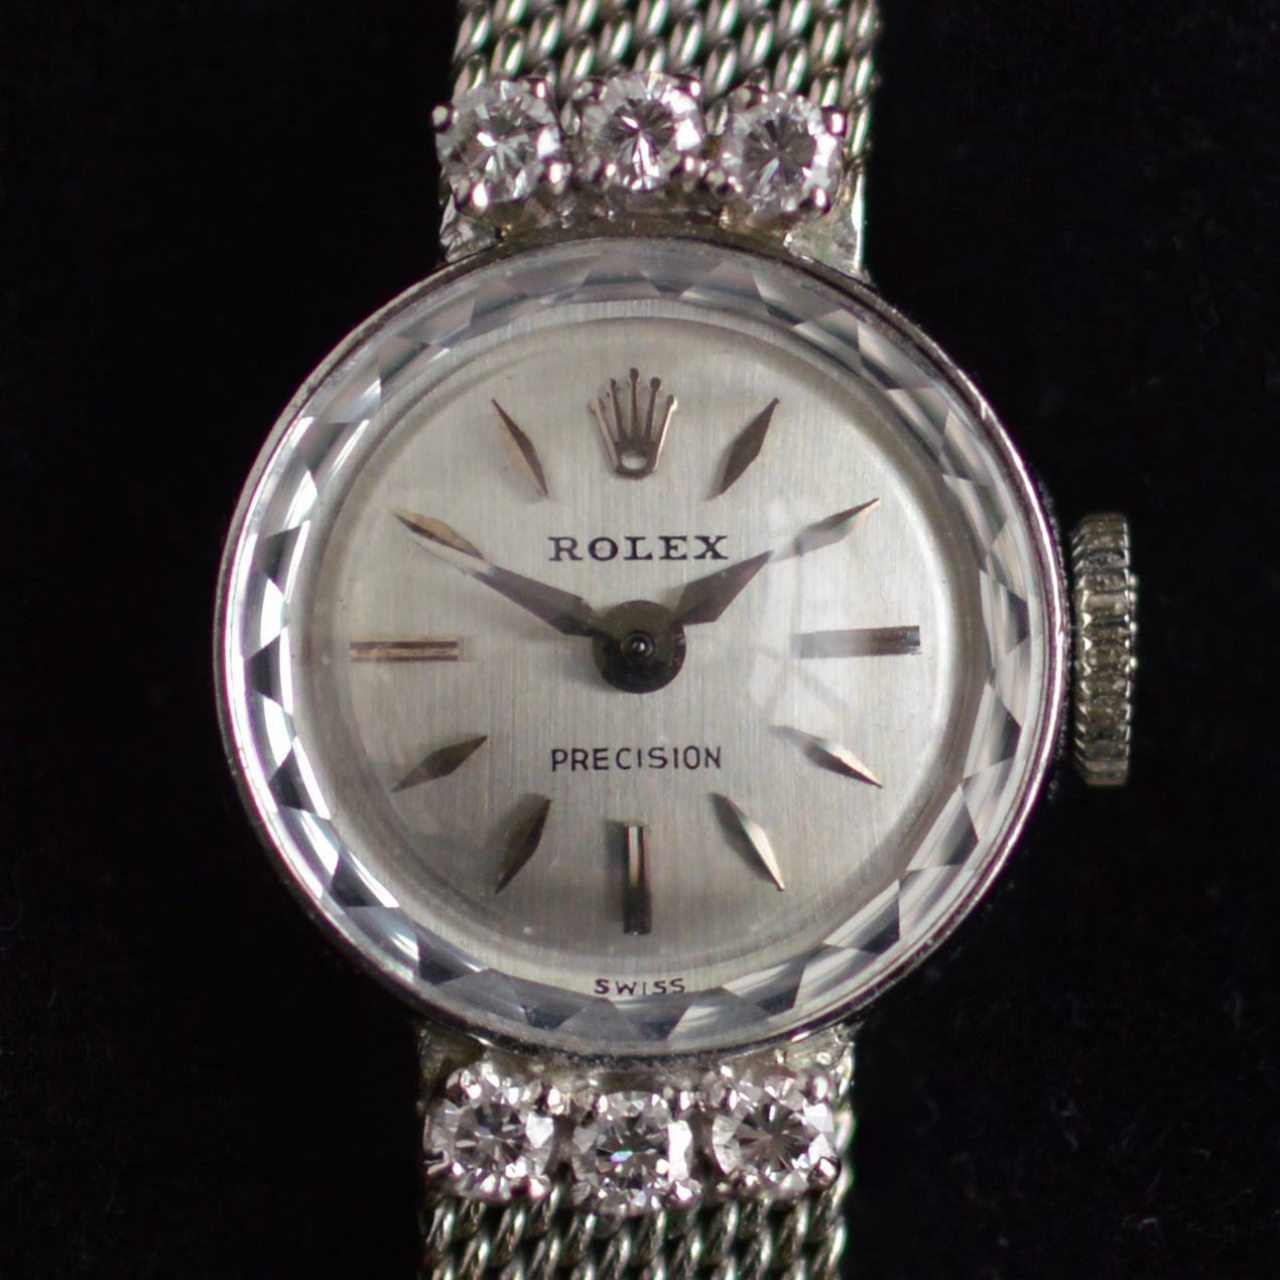 Ladies Rolex Precision watch - Rocks 